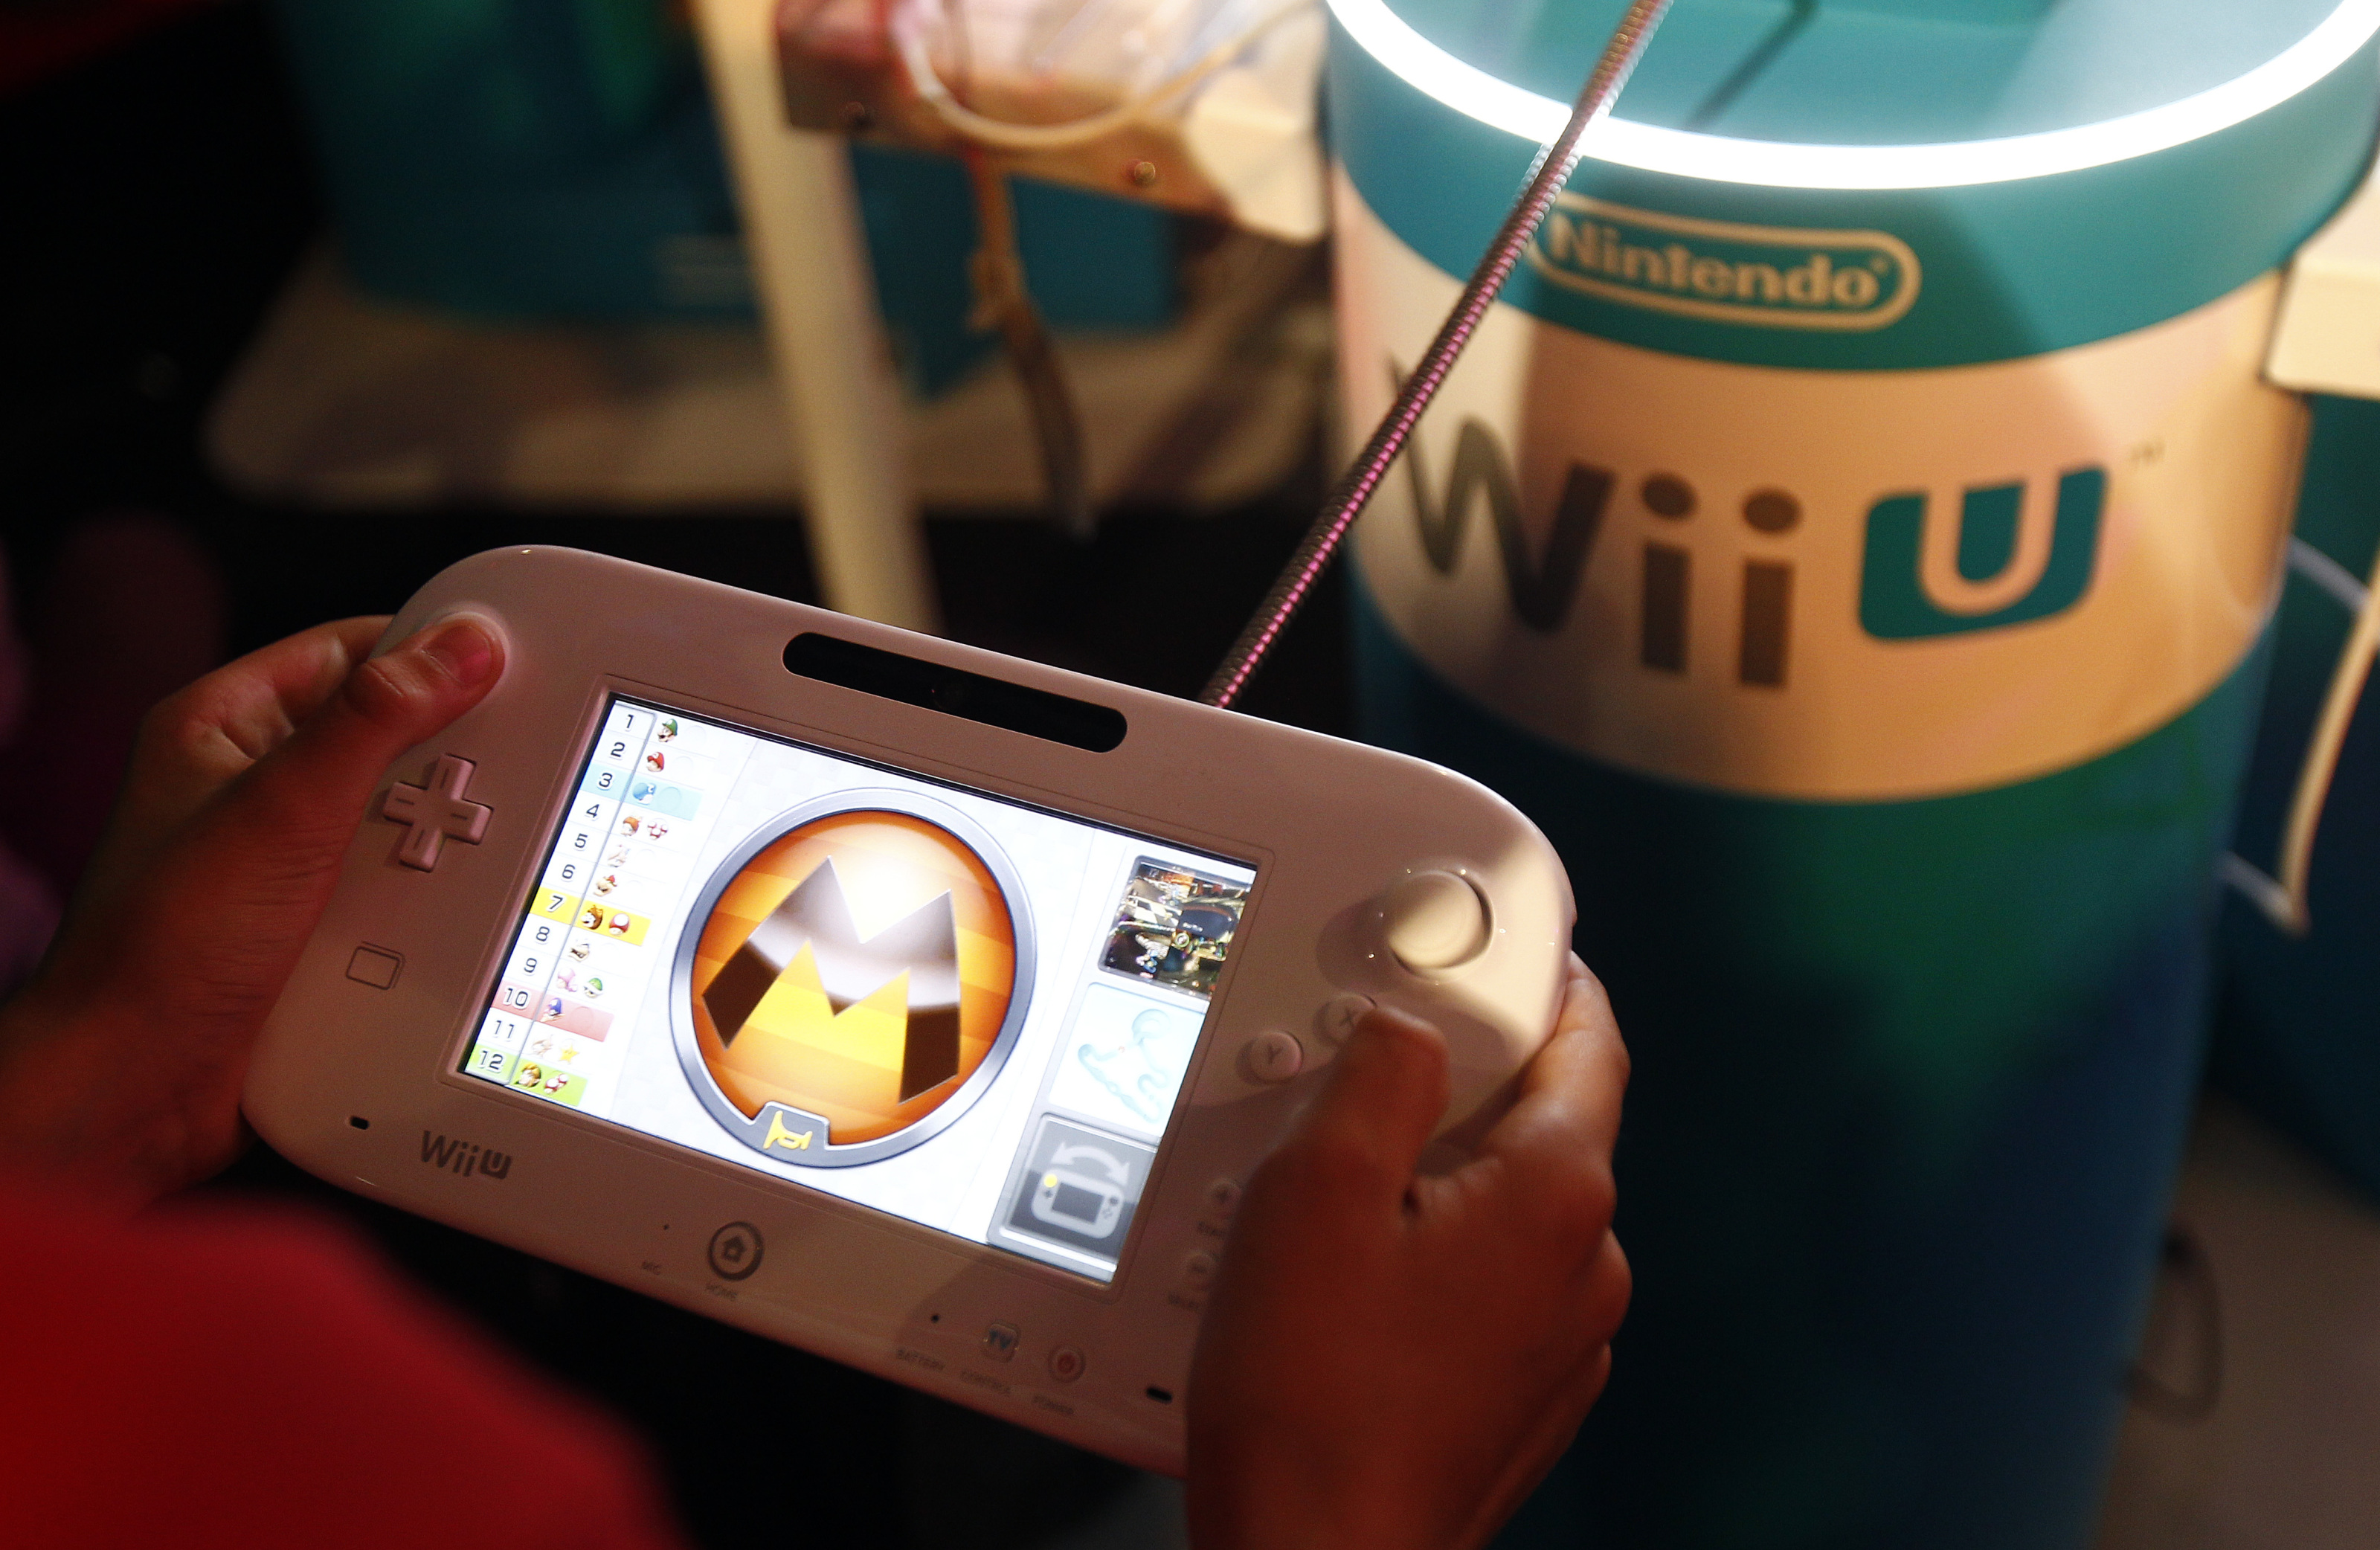 Nintendo To Shut Down Wii U, 3DS EShop; Credit Card Transactions